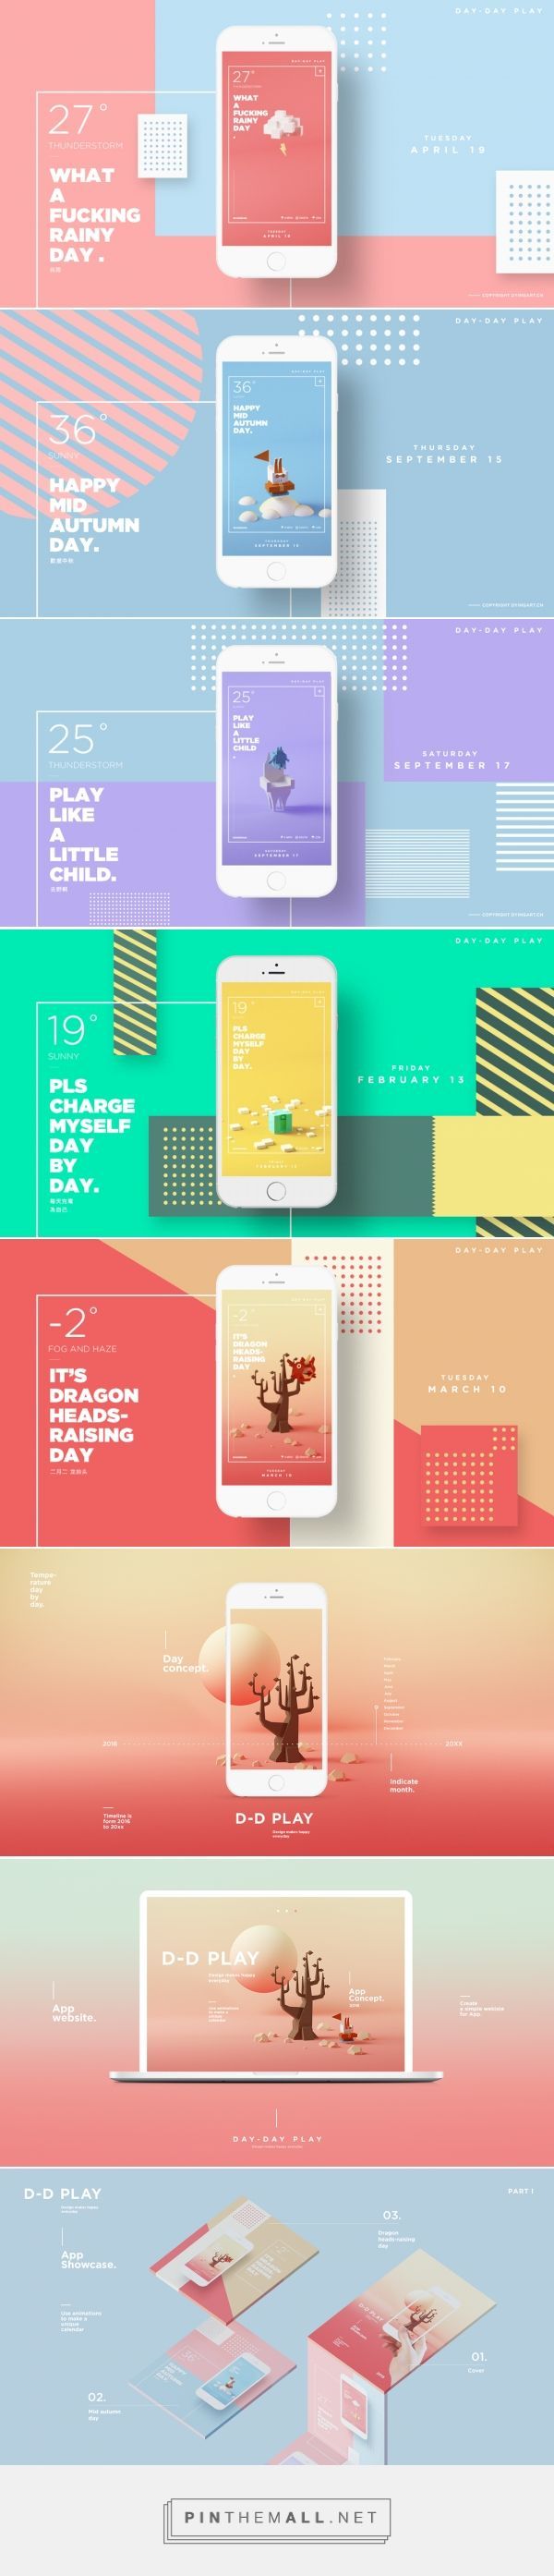 D-D Play – App Design | Abduzeedo Design Inspiration